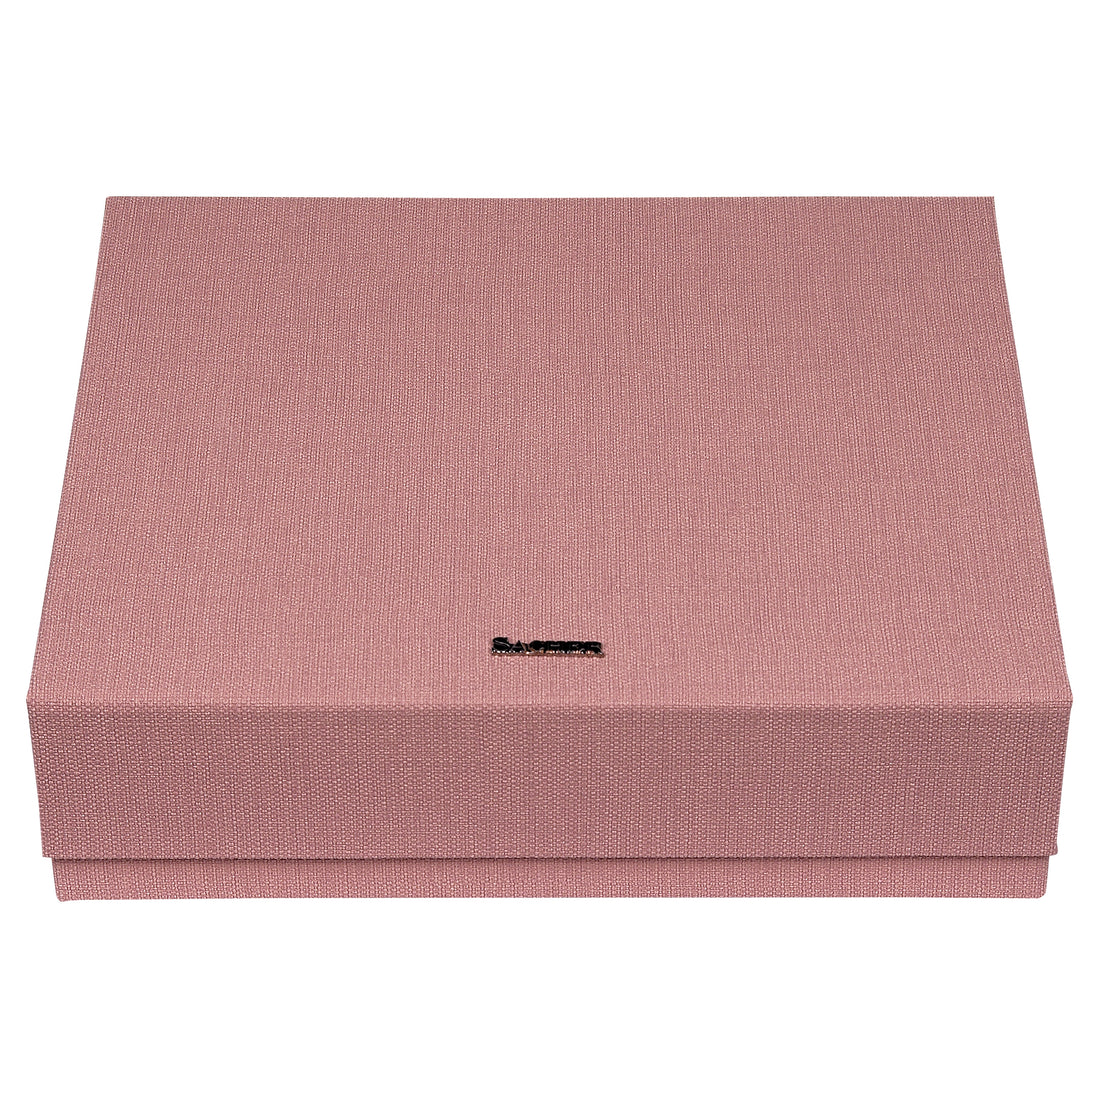 Schmuckbox Nora pastello / – Offizieller rosa | 1846 Manufaktur Store SACHER